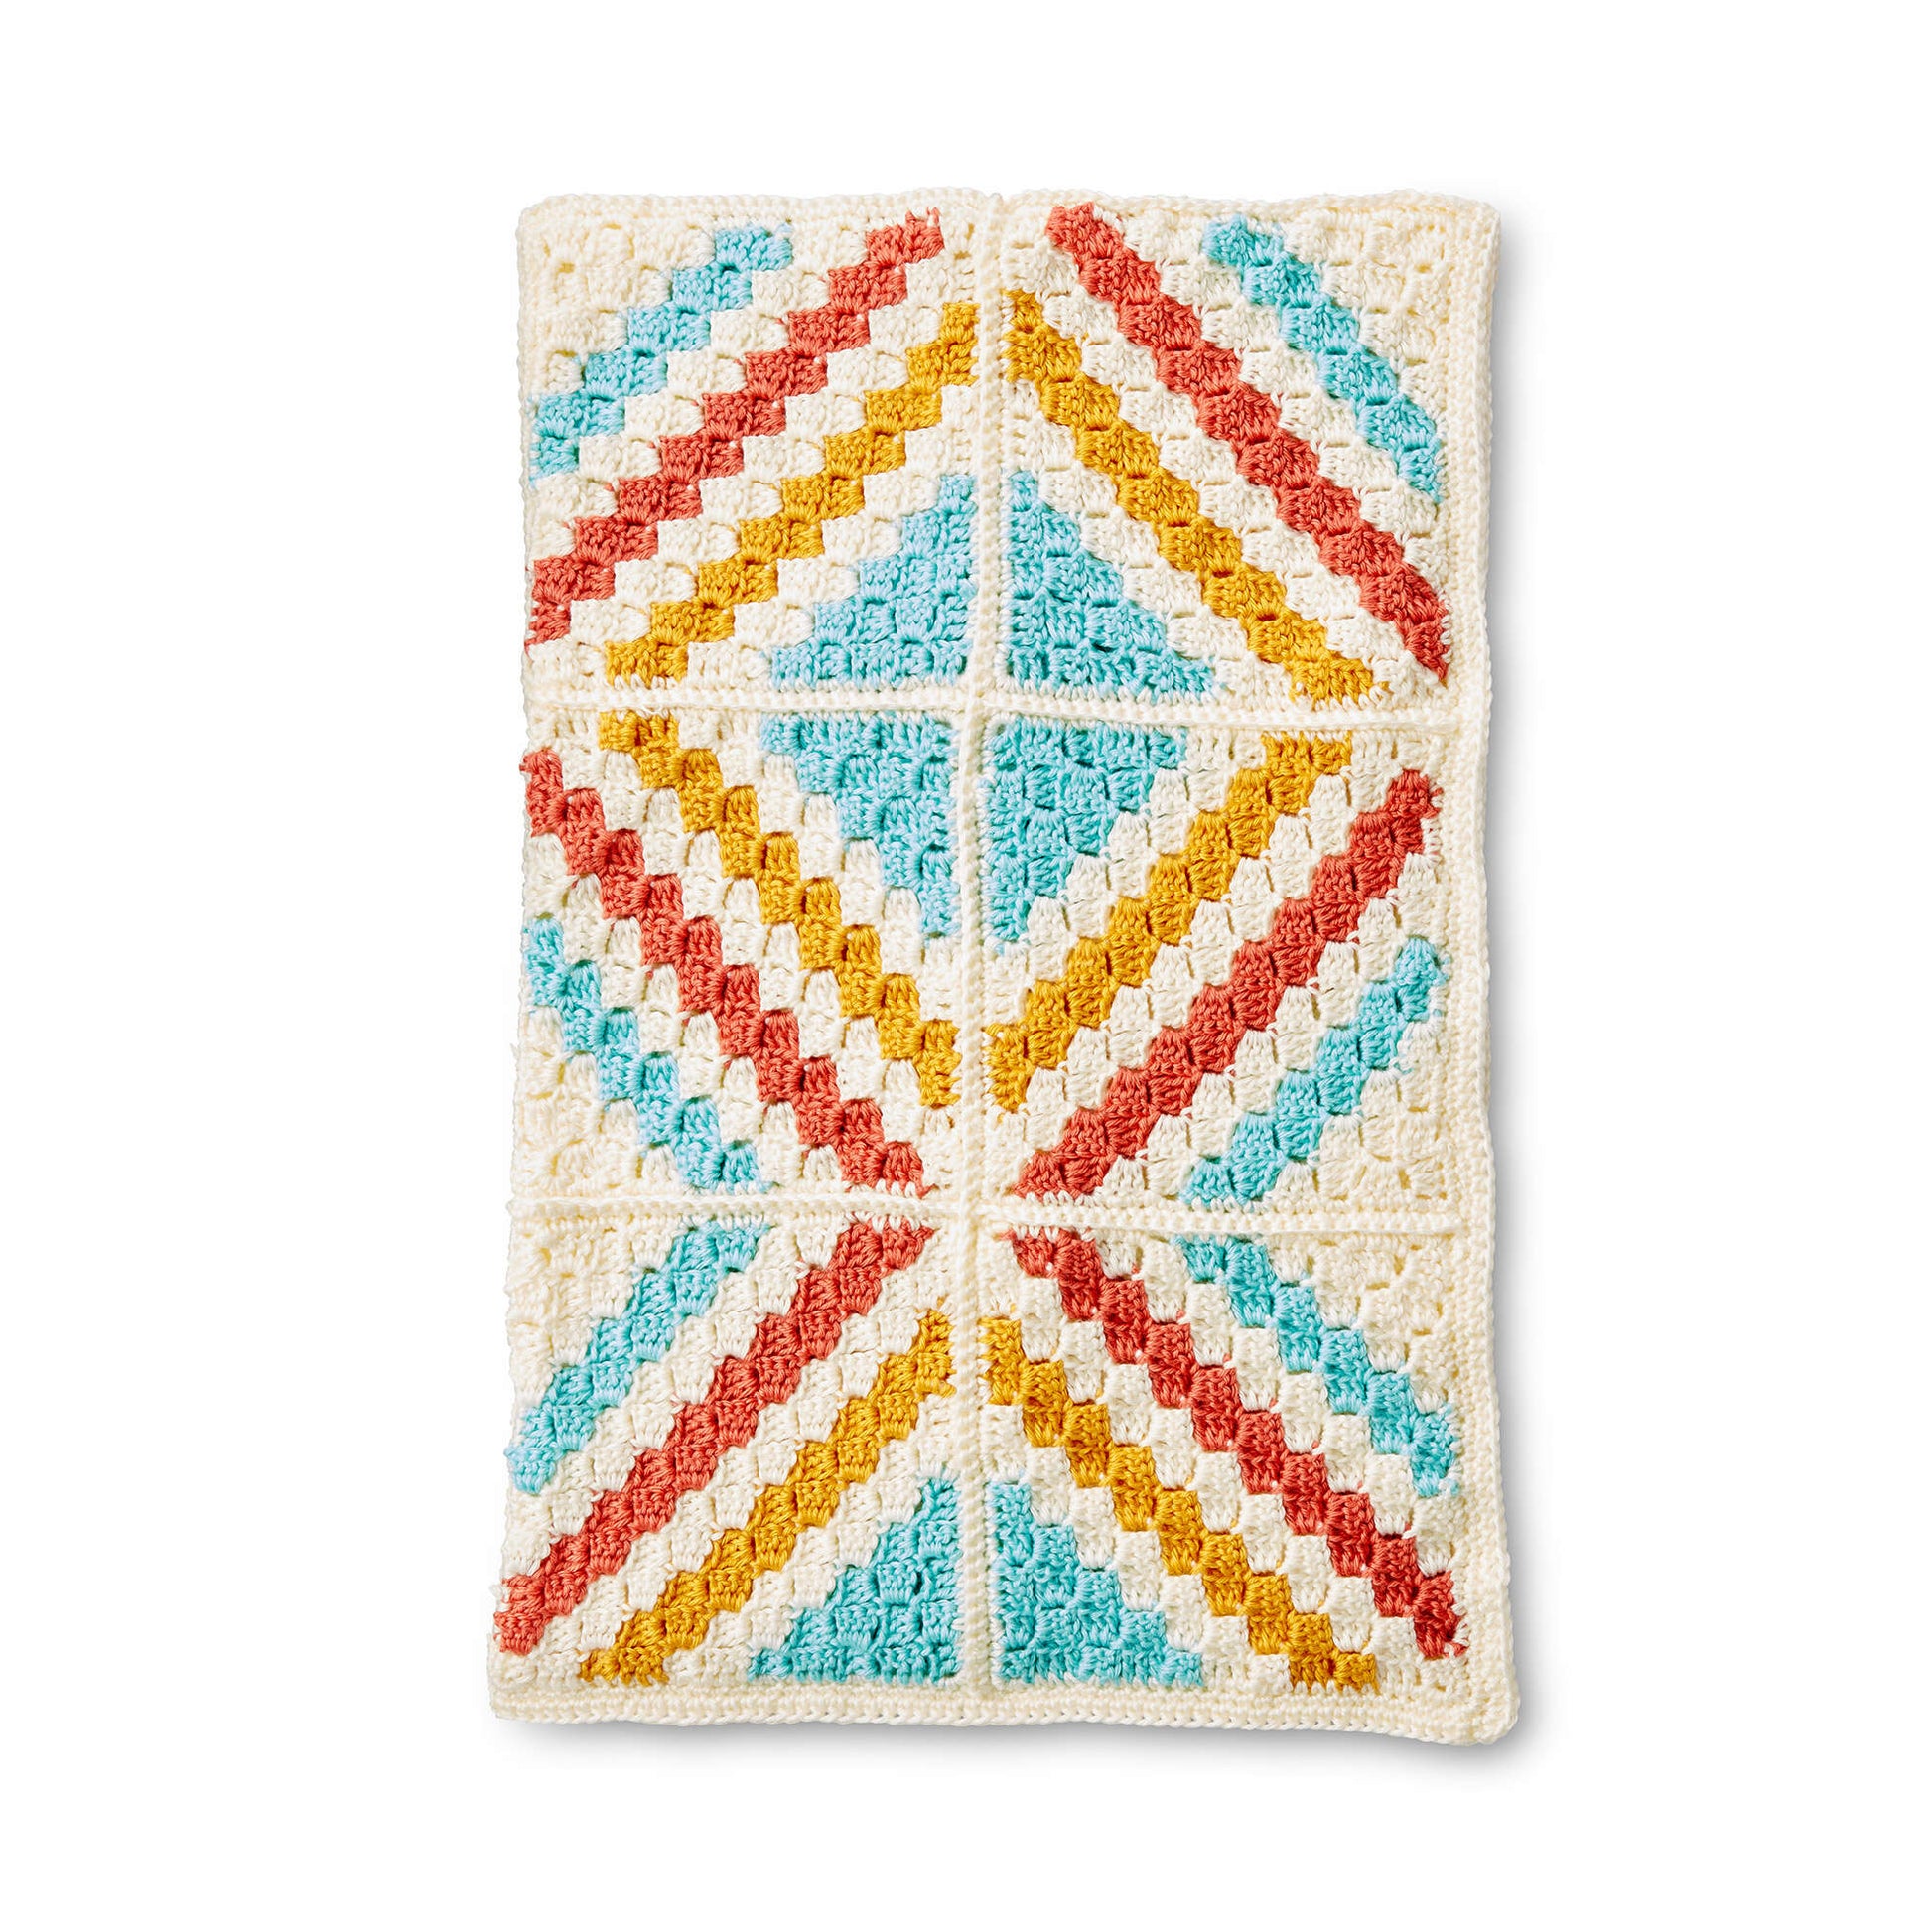 Caron Corner To Corner Crochet Motifs Blanket Single Size